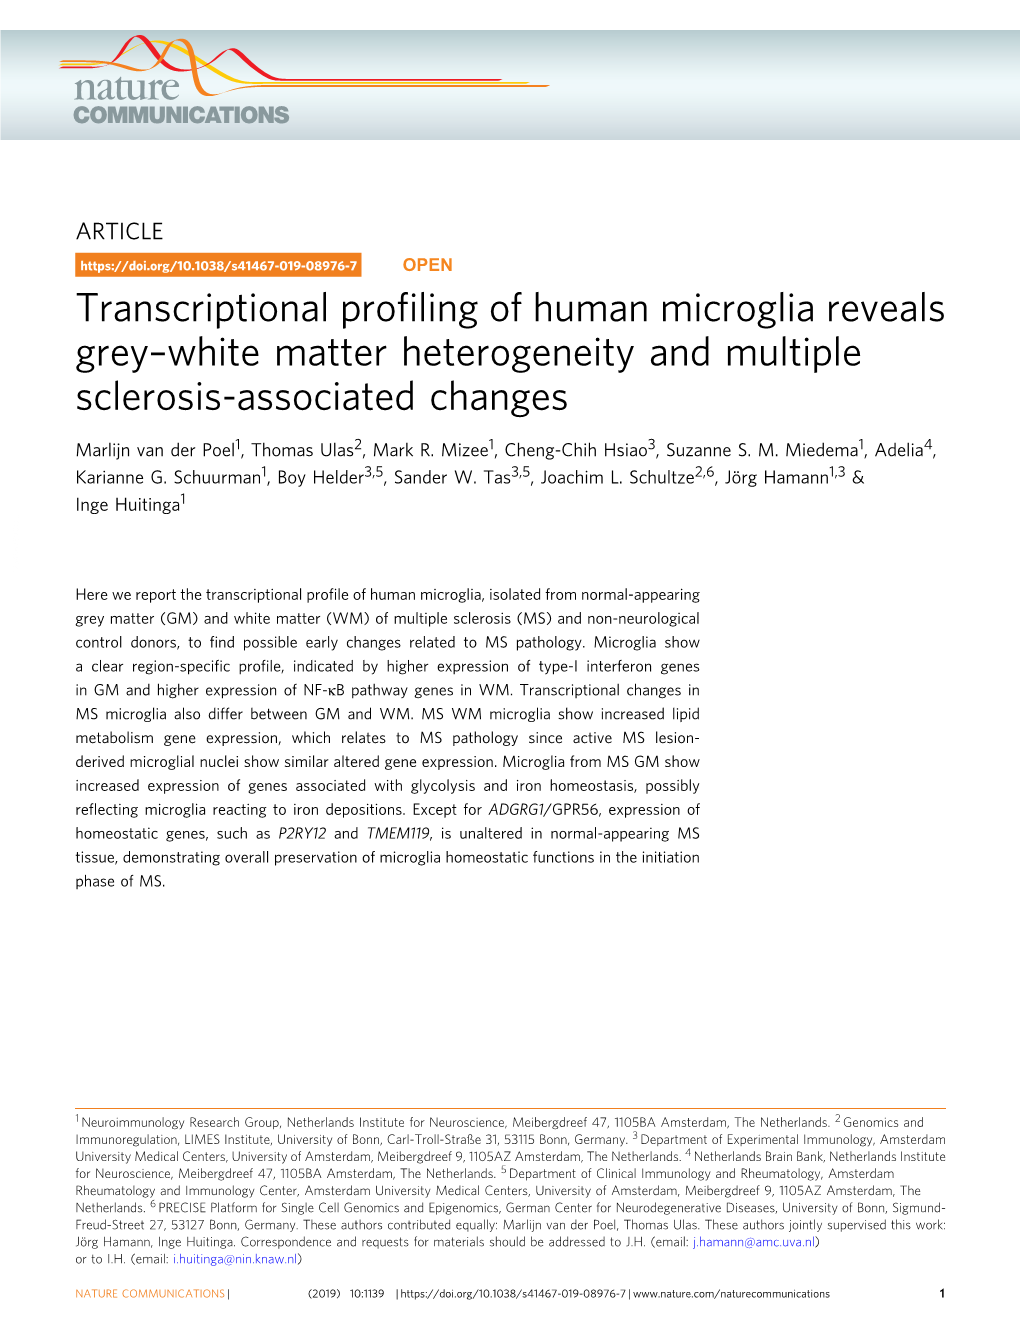 Transcriptional Profiling of Human Microglia Reveals Greyâ